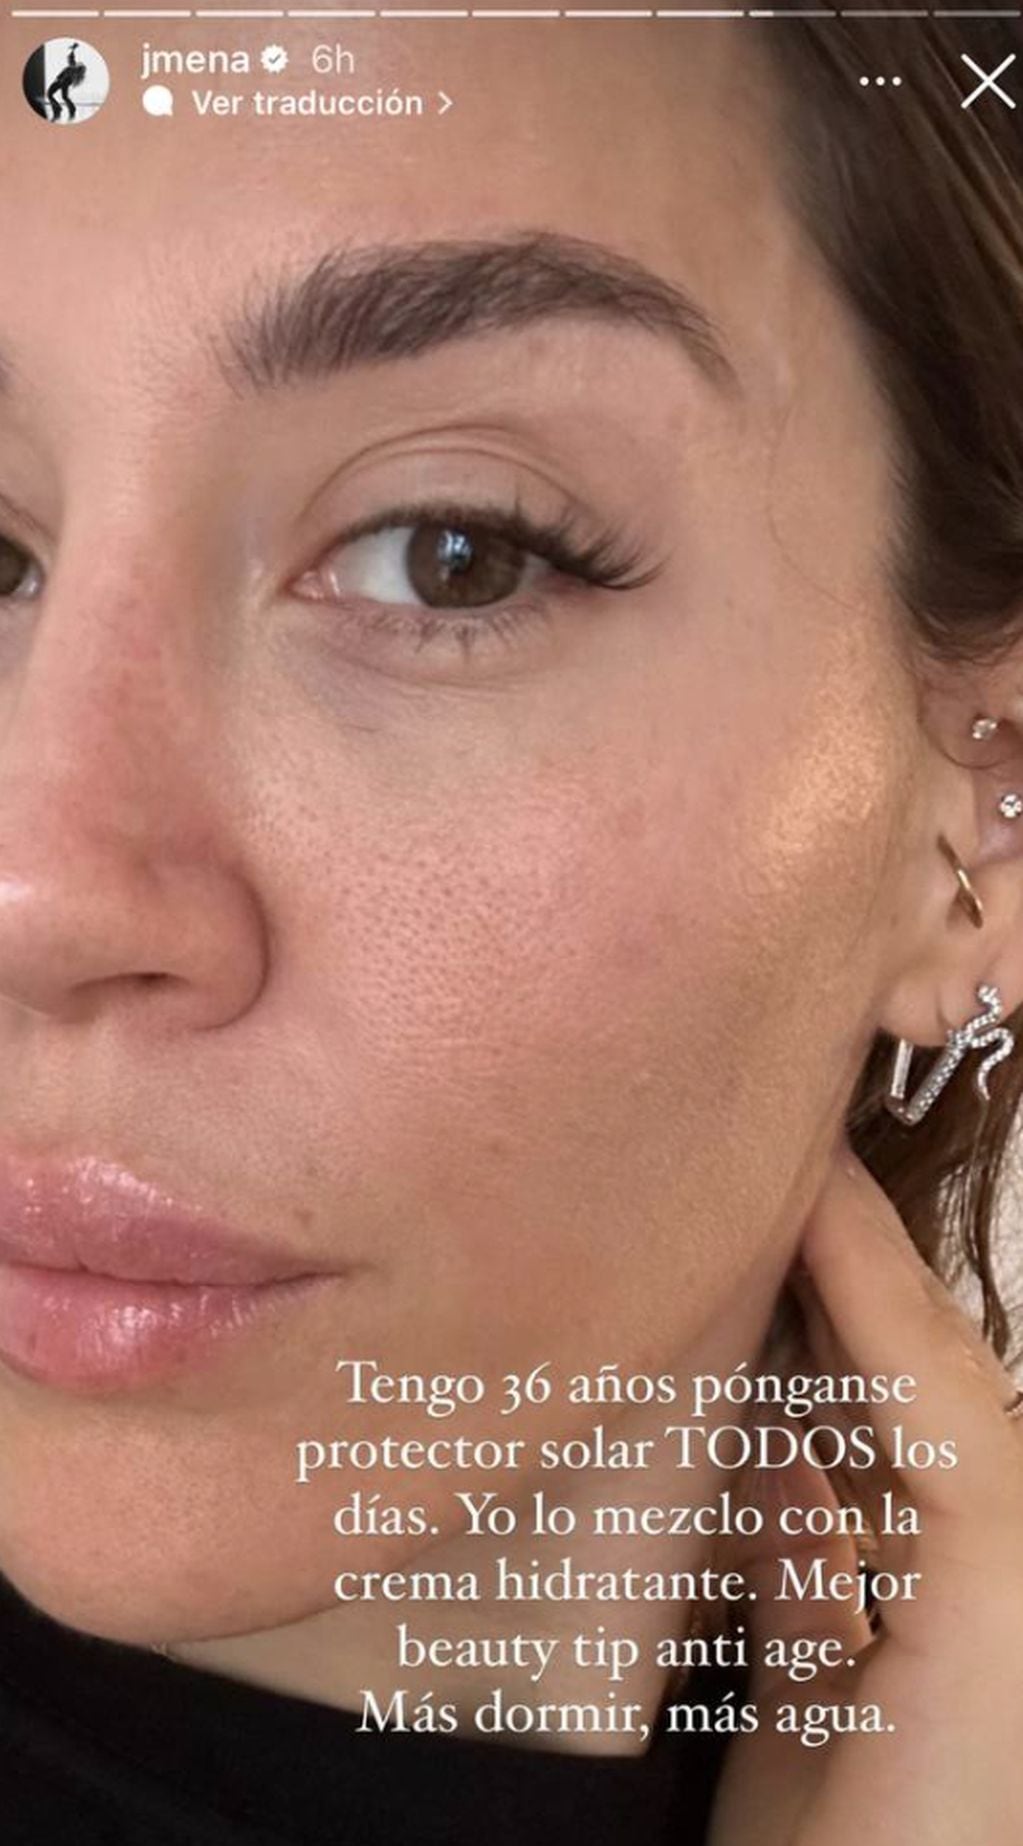 La rutina de skin care de Jimena Barón